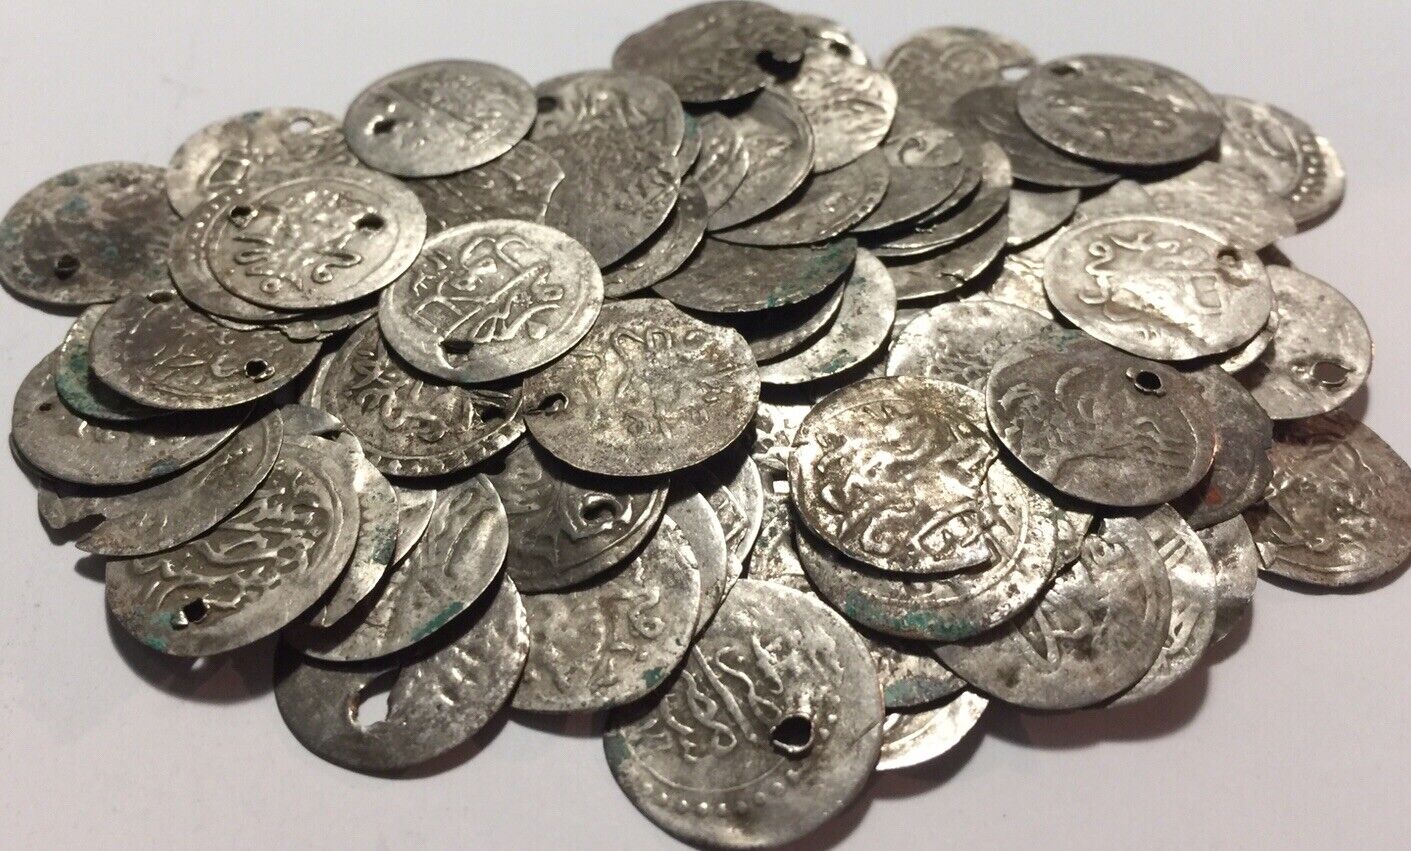 Lot 5 original Islamic silver para coins/Ottoman Empire Abdul Hamid Selim Mahmud Без бренда - фотография #7